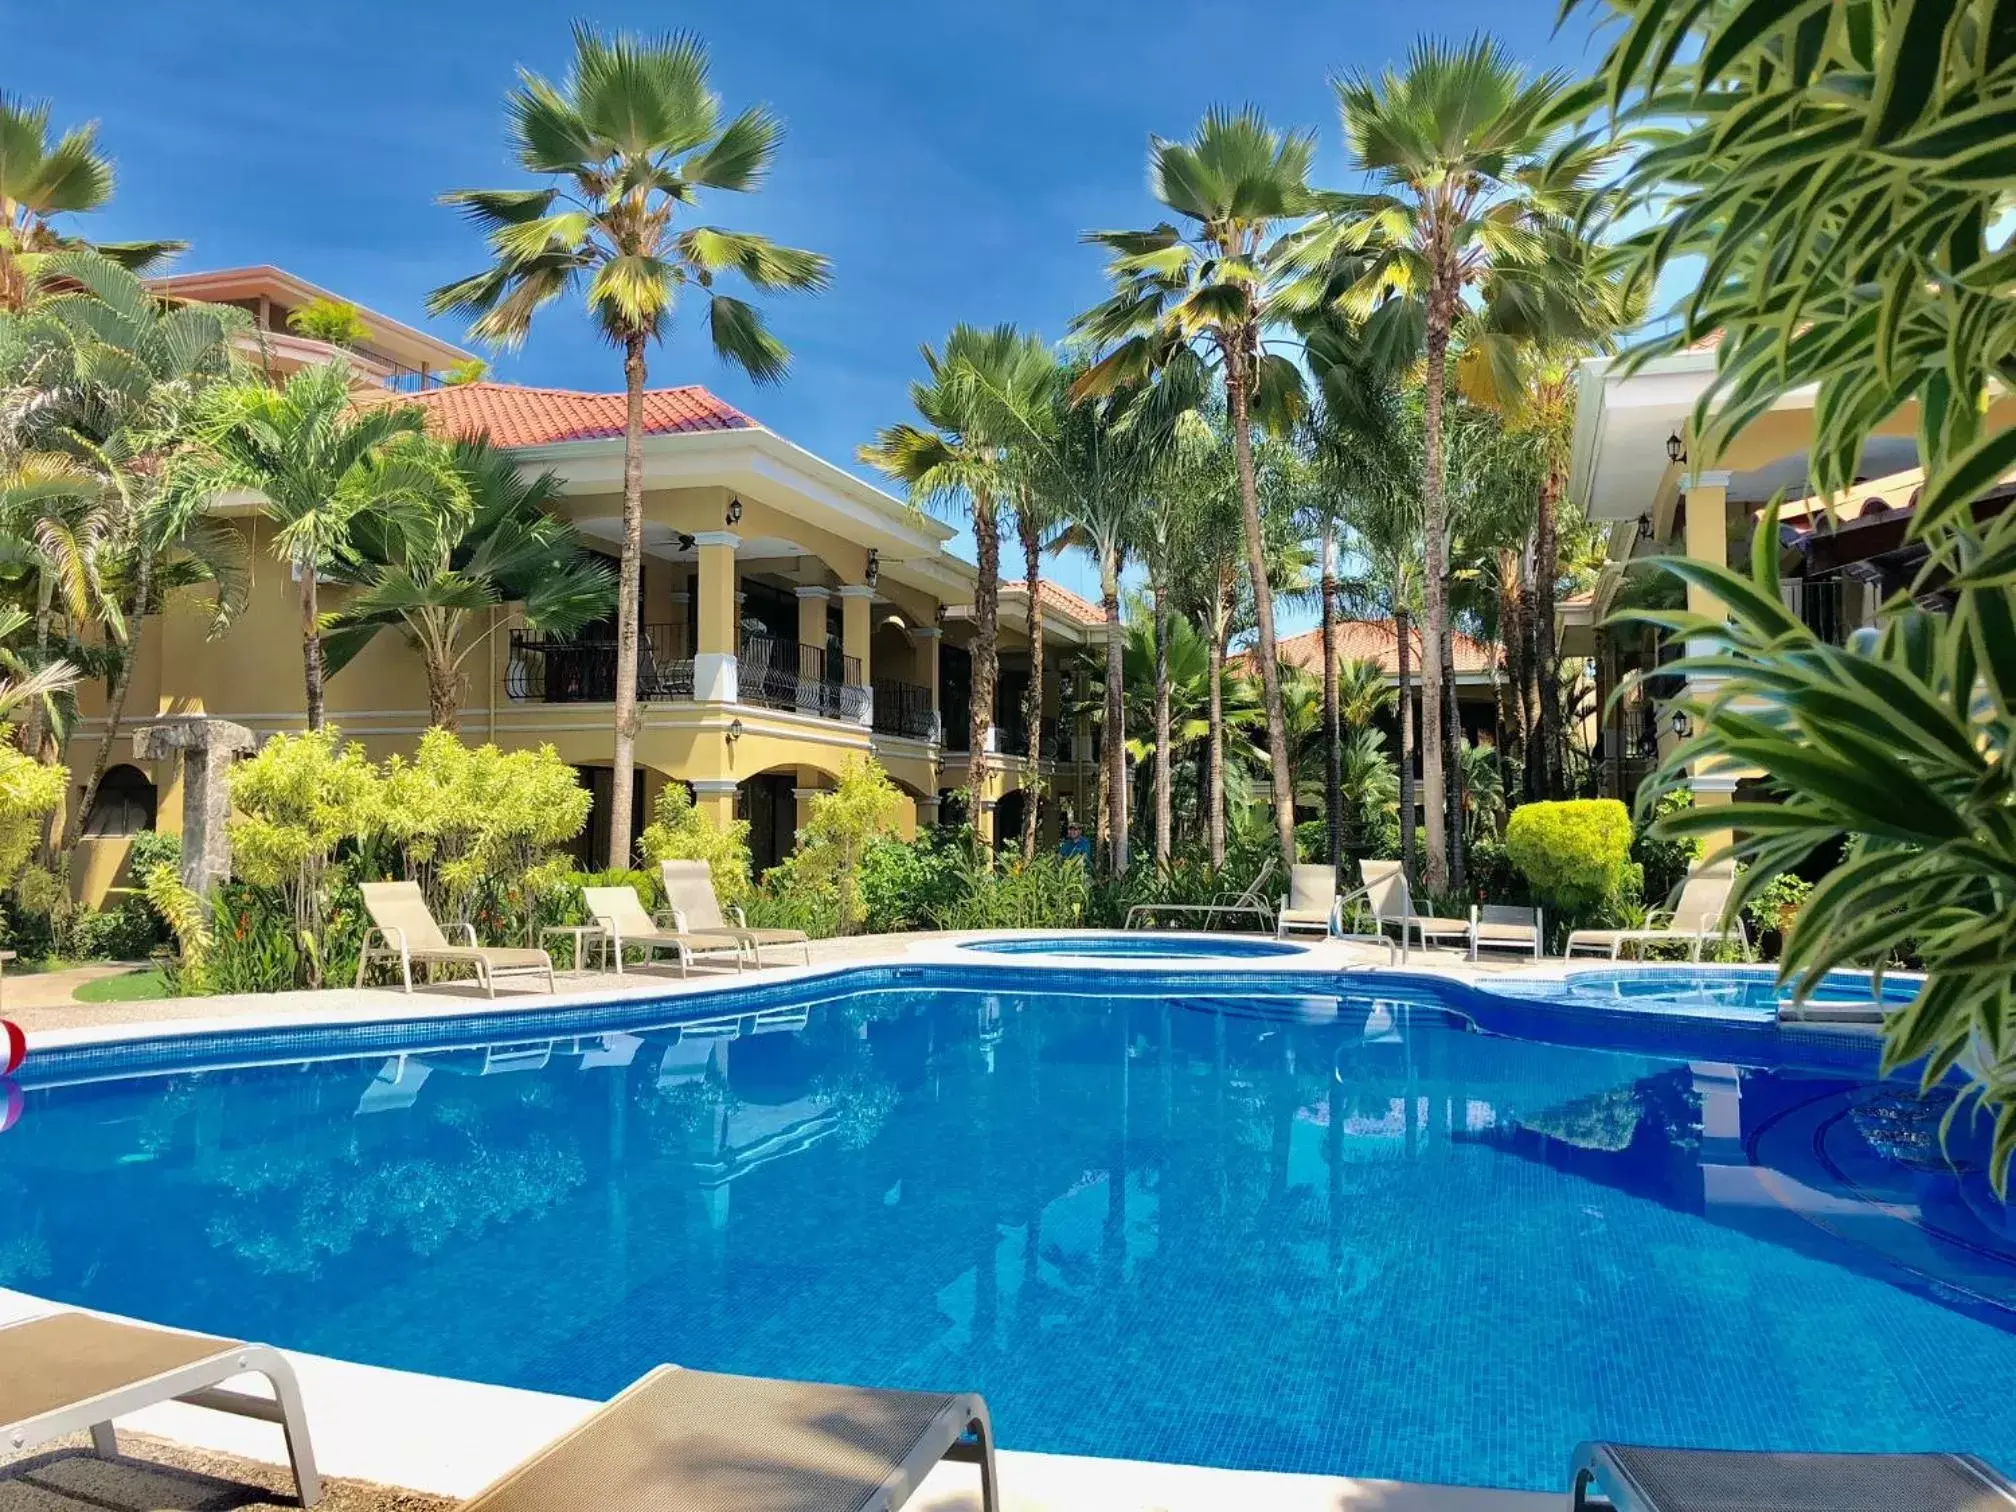 Swimming Pool in Monte Carlo Luxury Condominiums